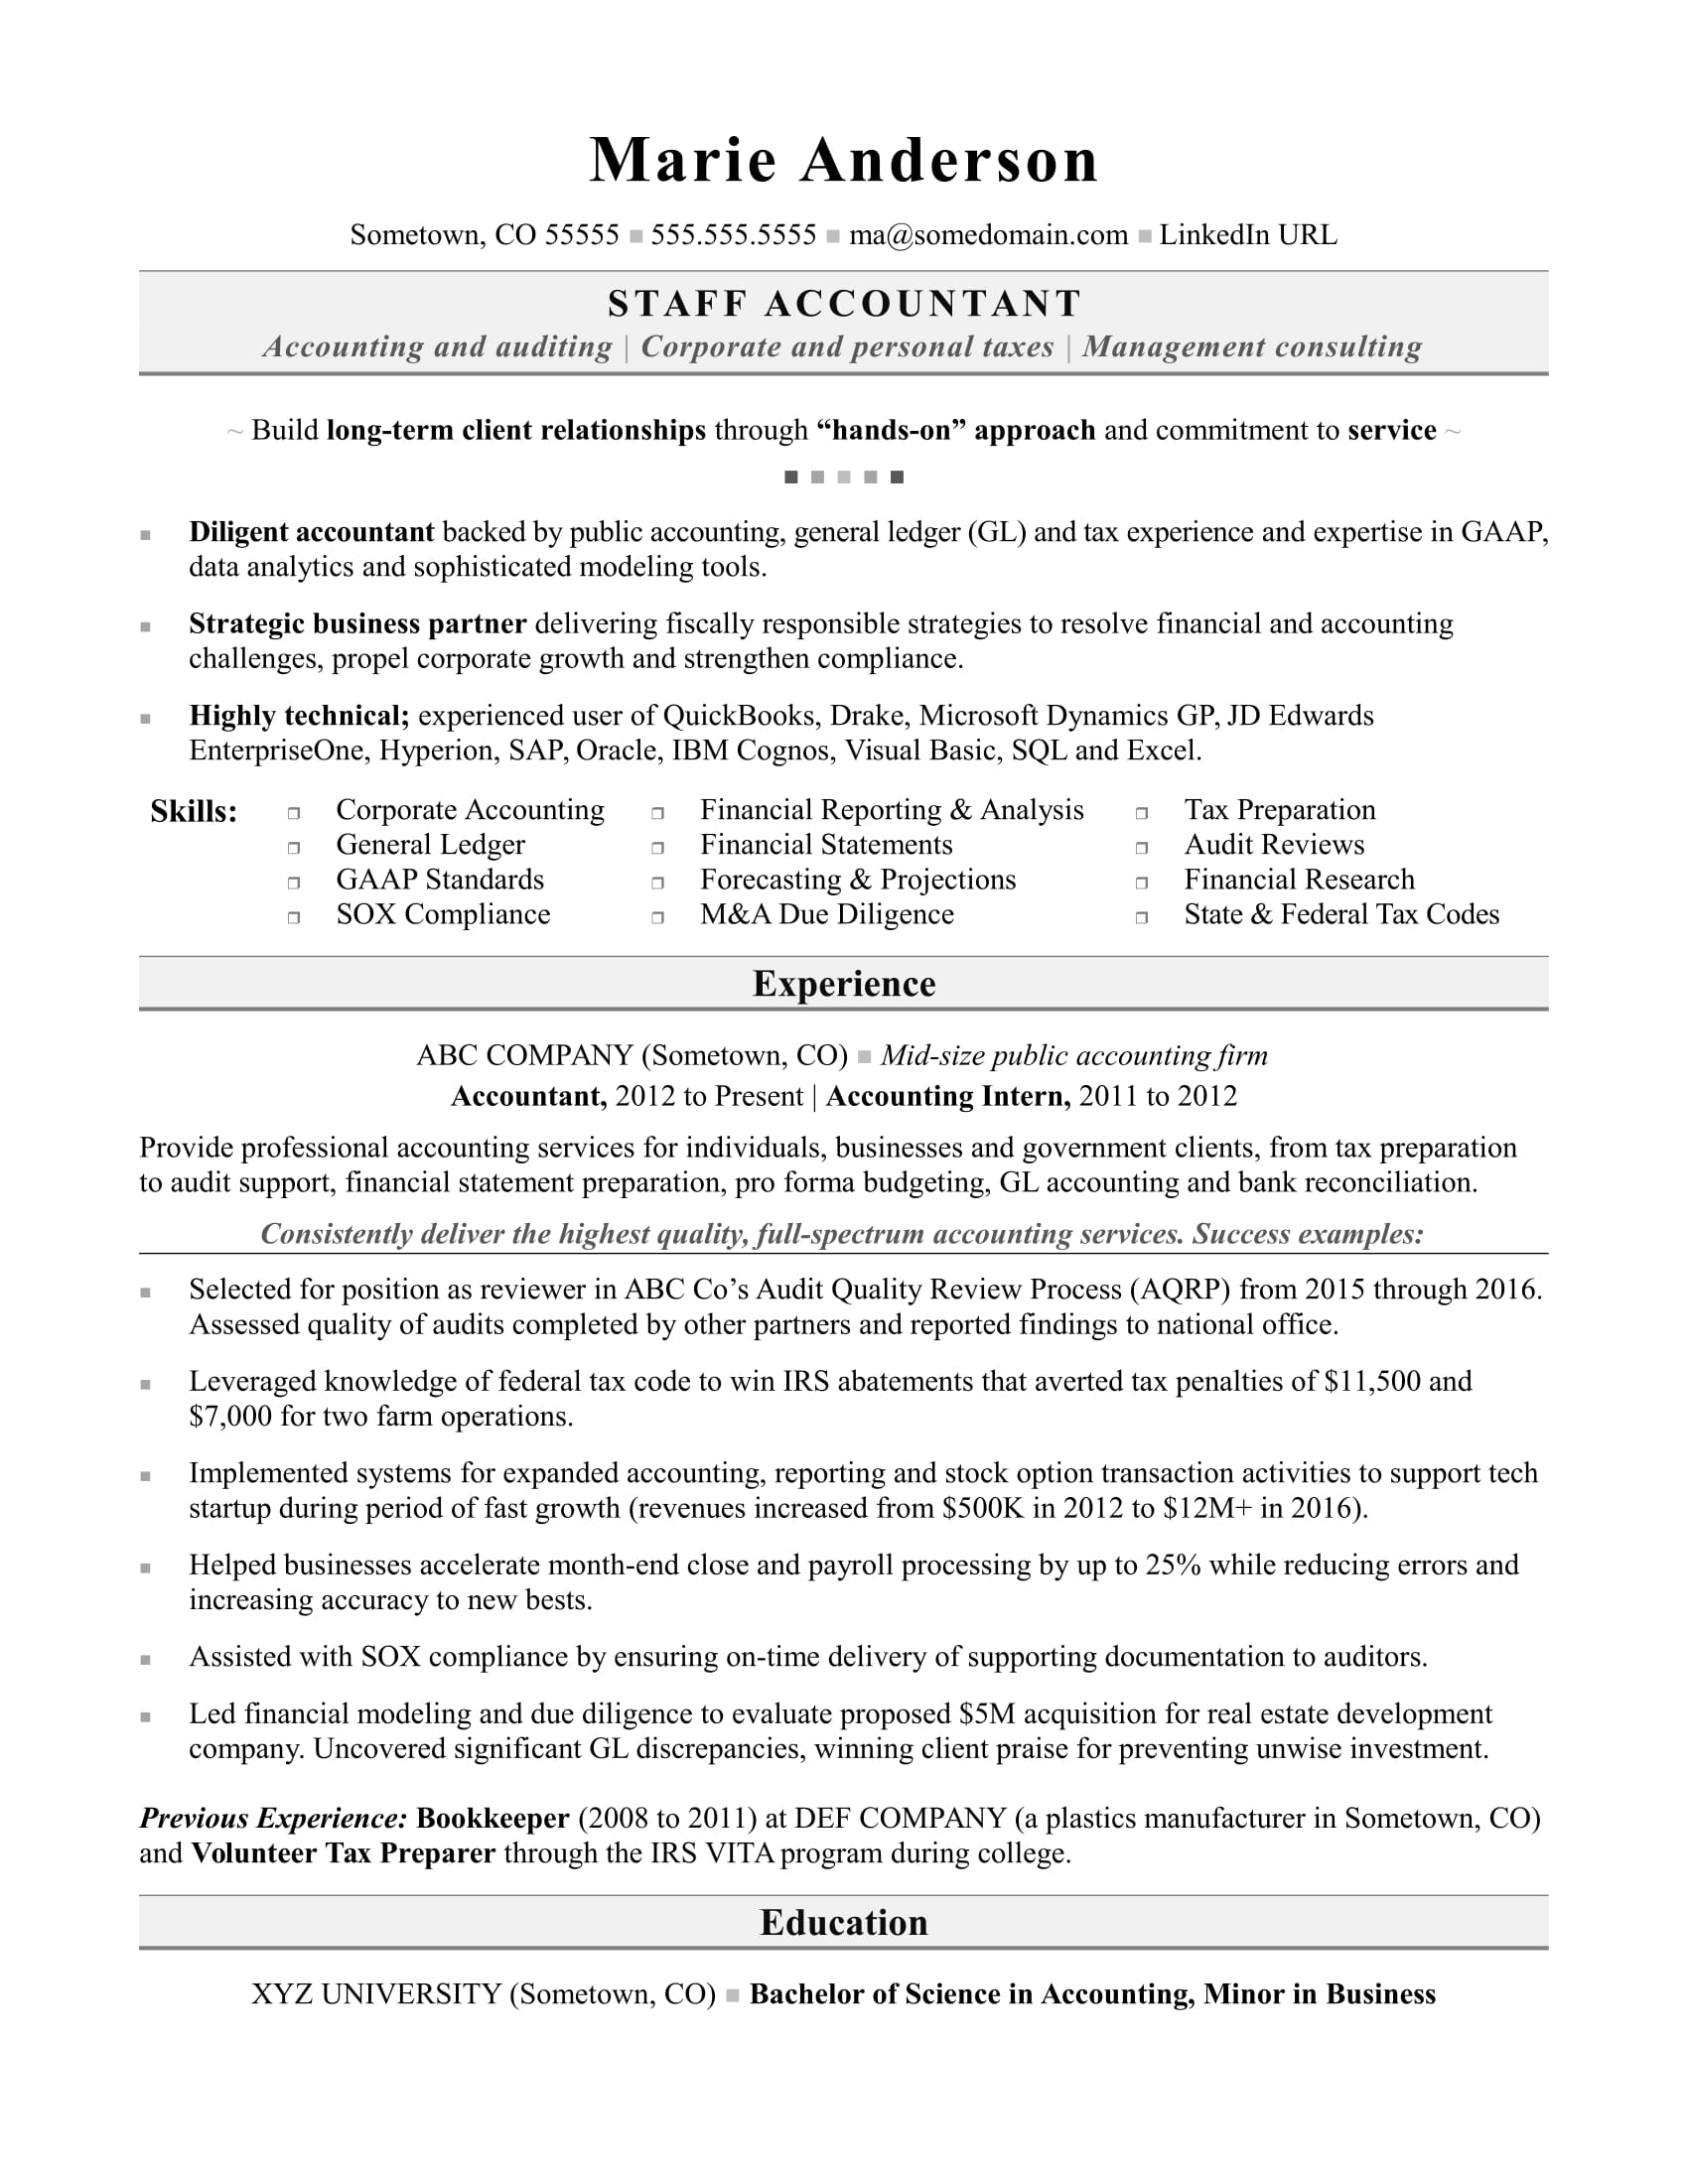 Accounting Resume Sample | Monster.com